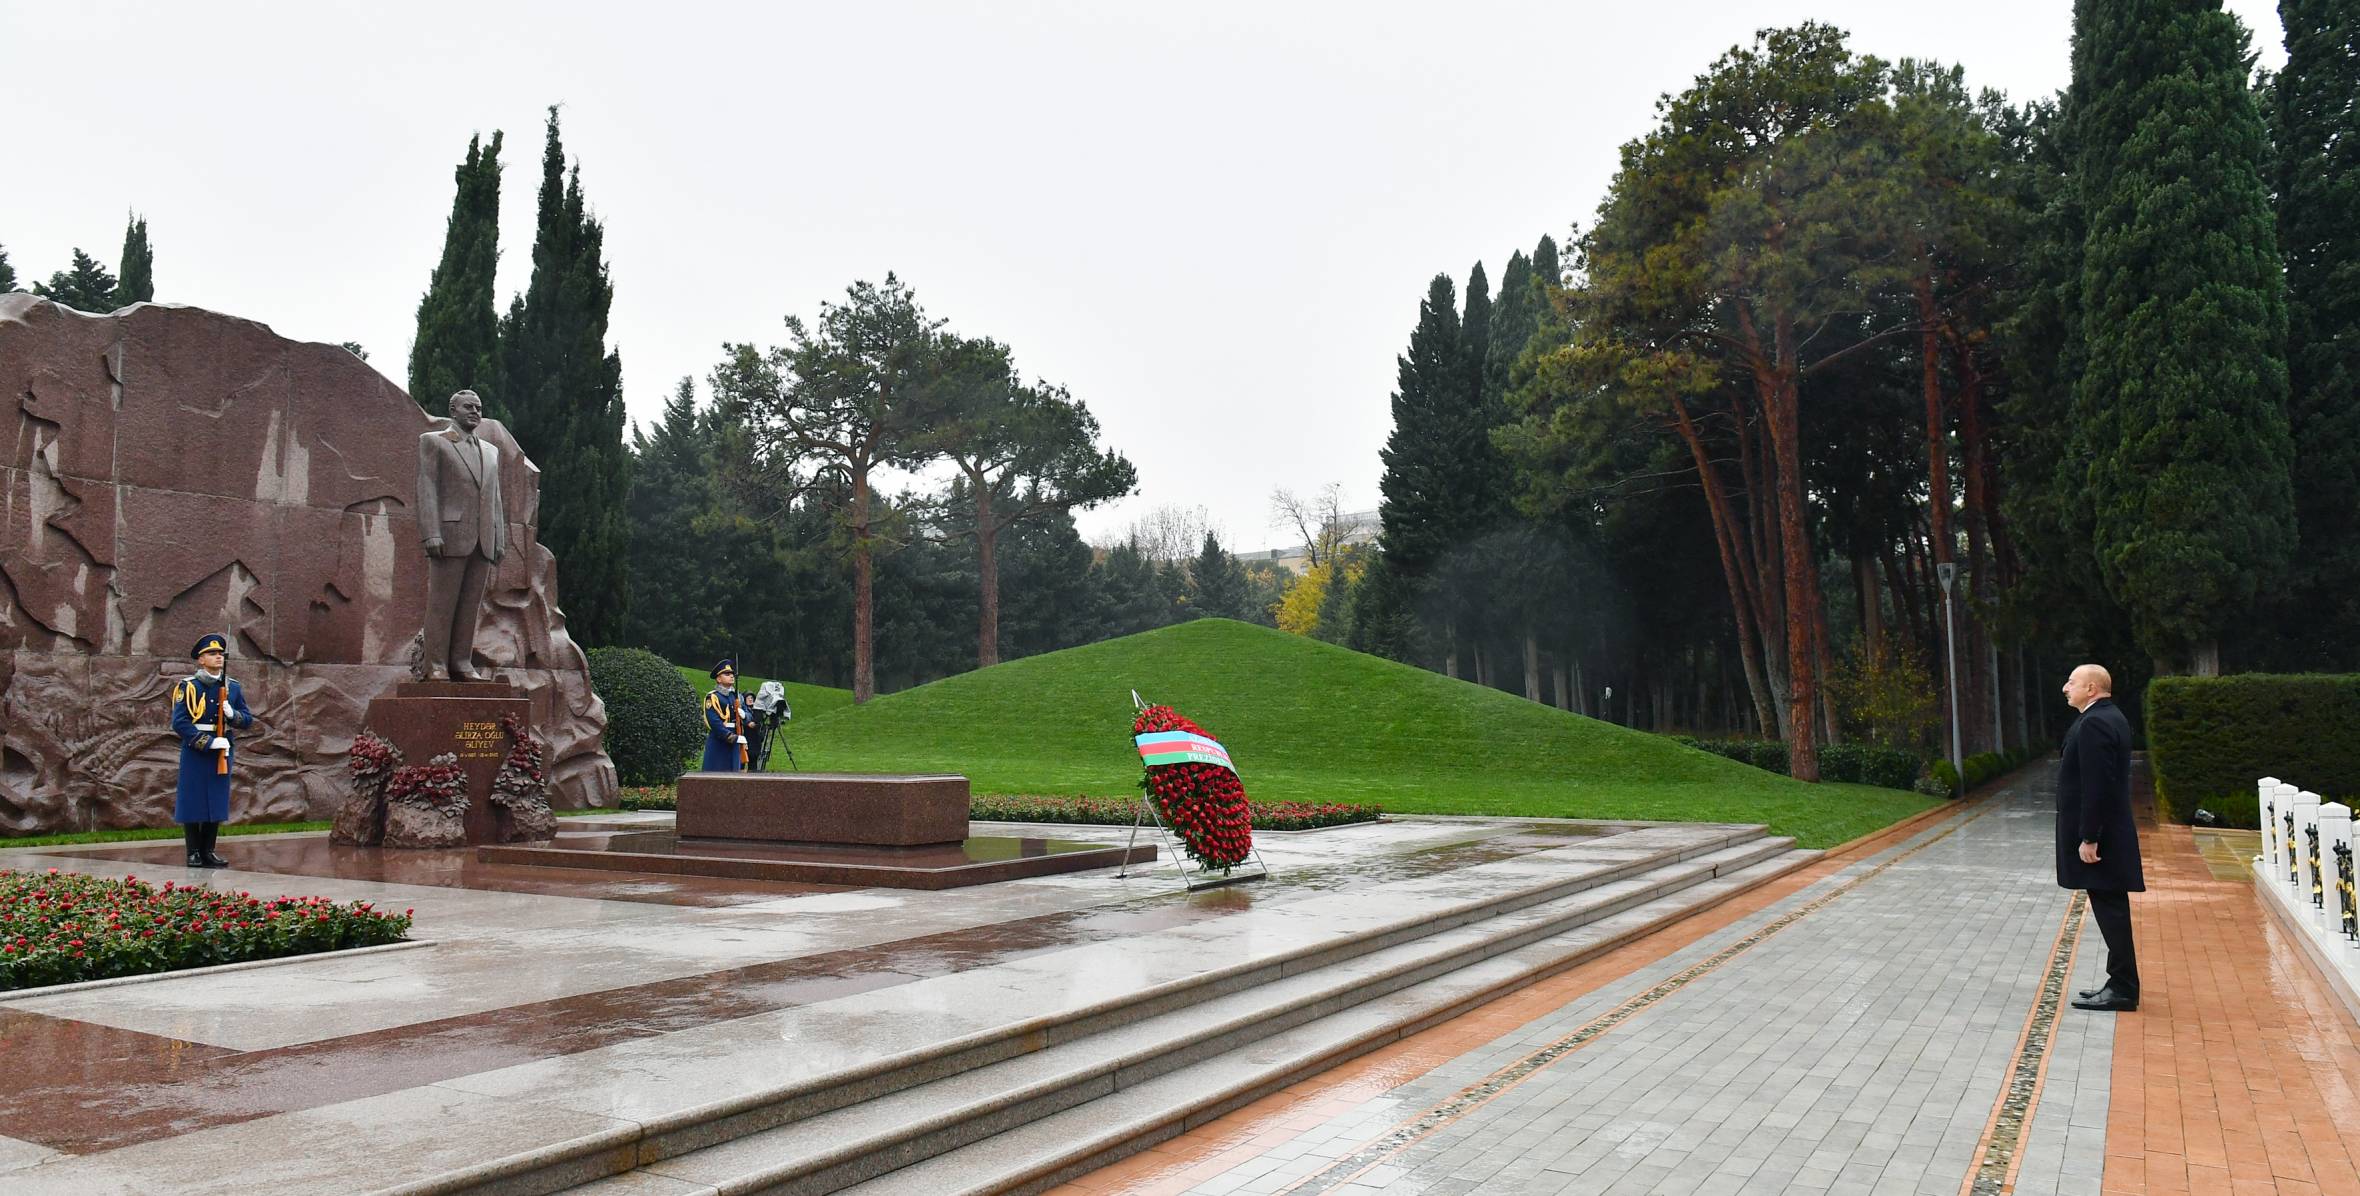 Ilham Aliyev visited the tomb of National Leader Heydar Aliyev